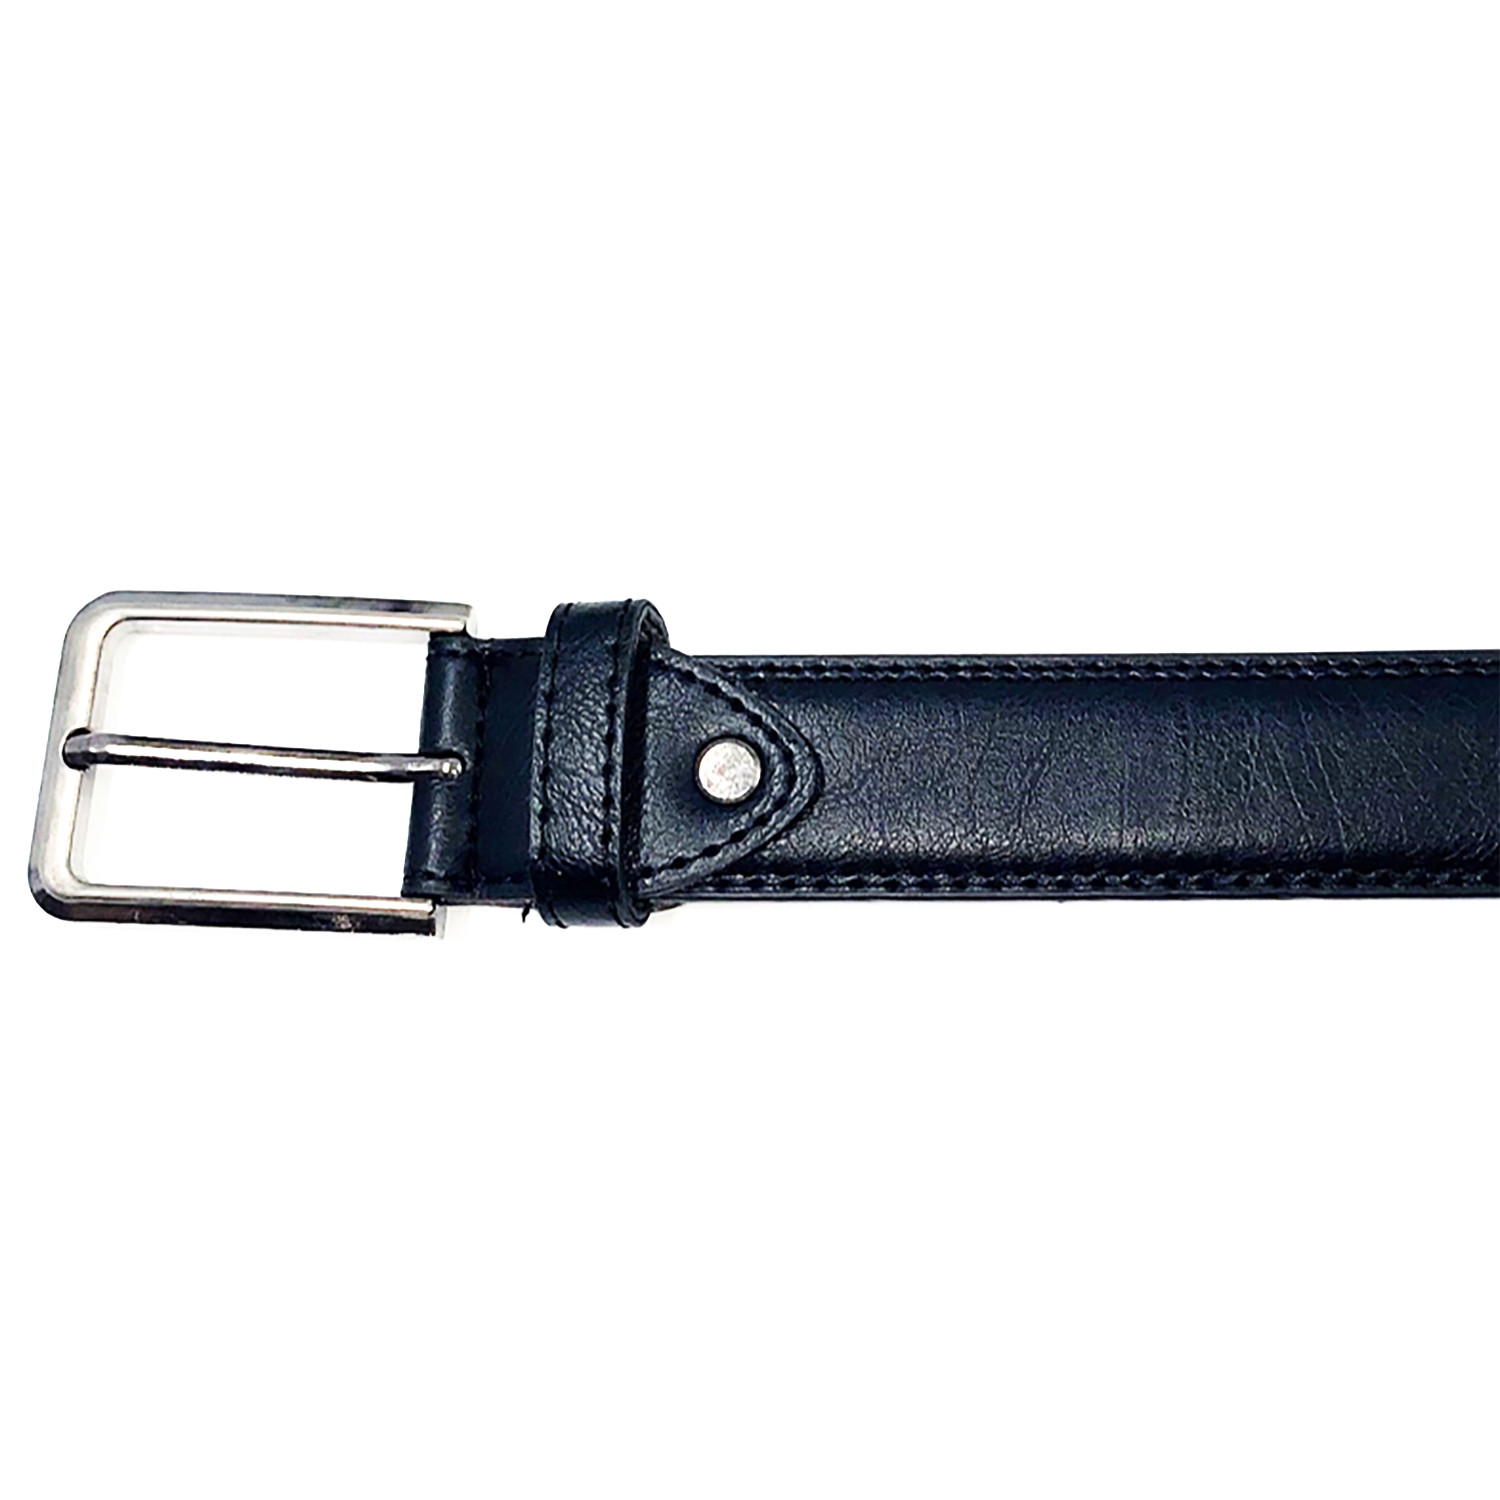 Fashionable Men's Belt - Black / M Image